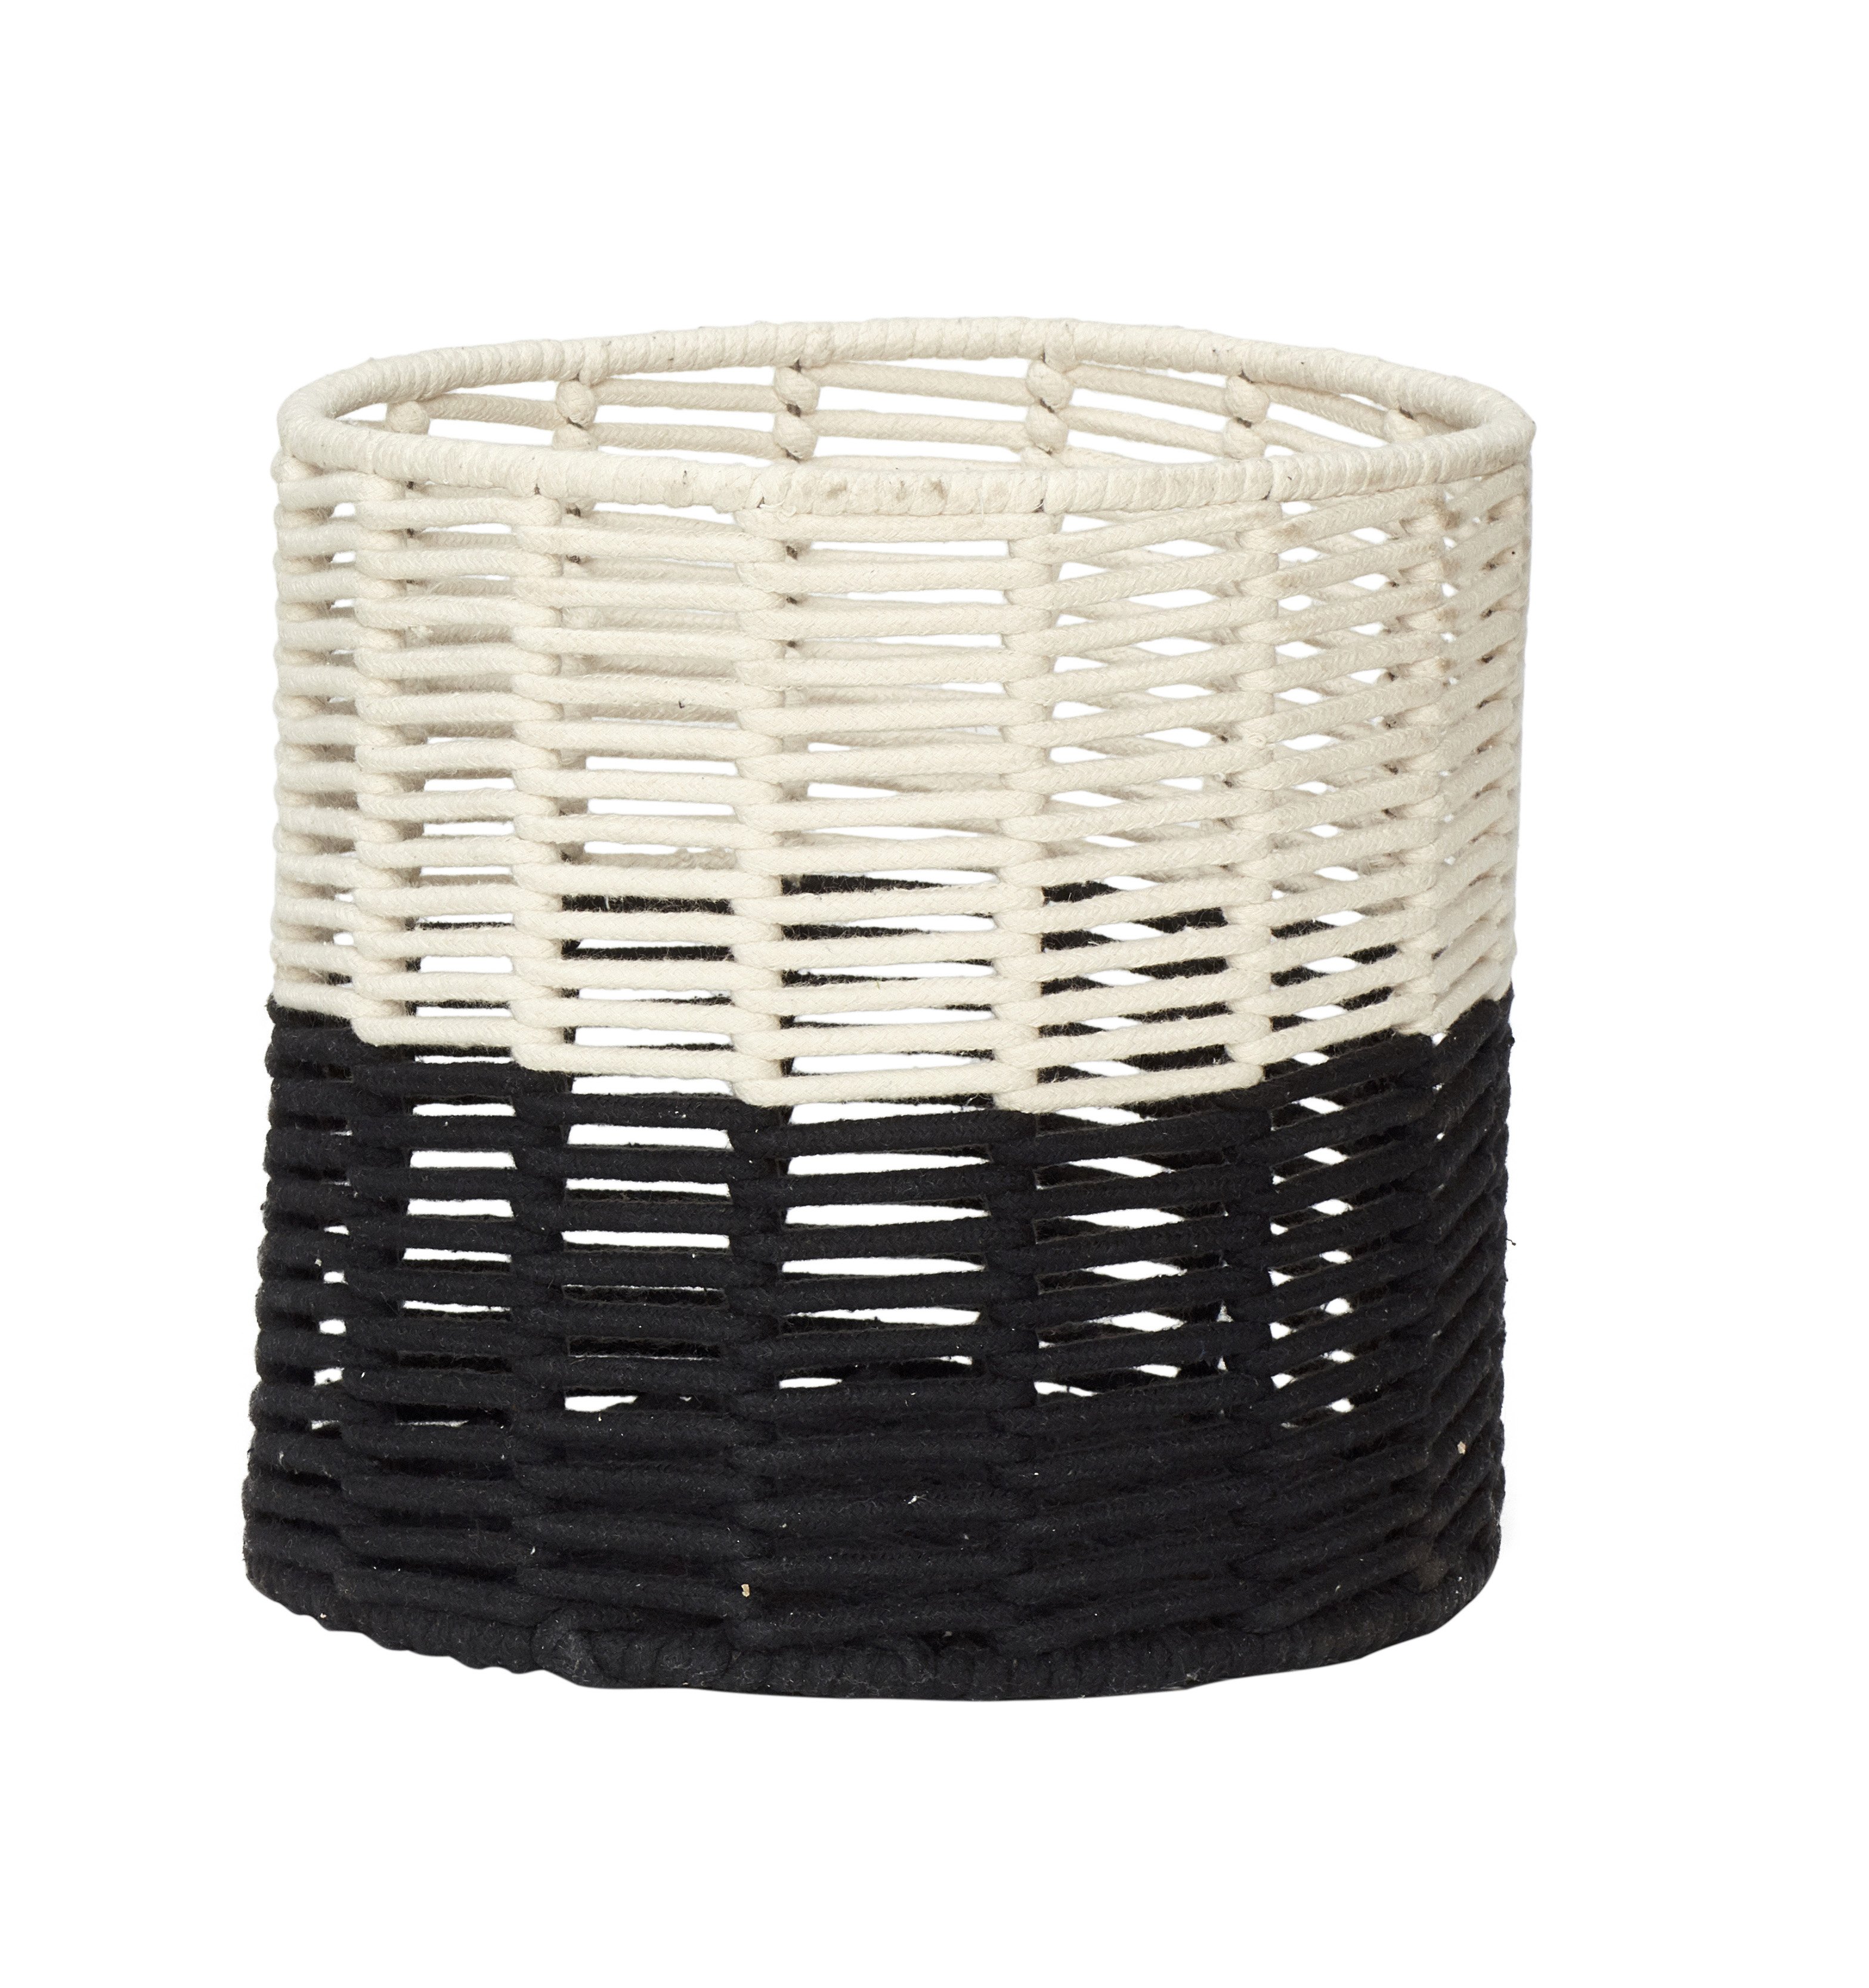 Hubsch Cream and Black Round Cotton Rope Basket in Large